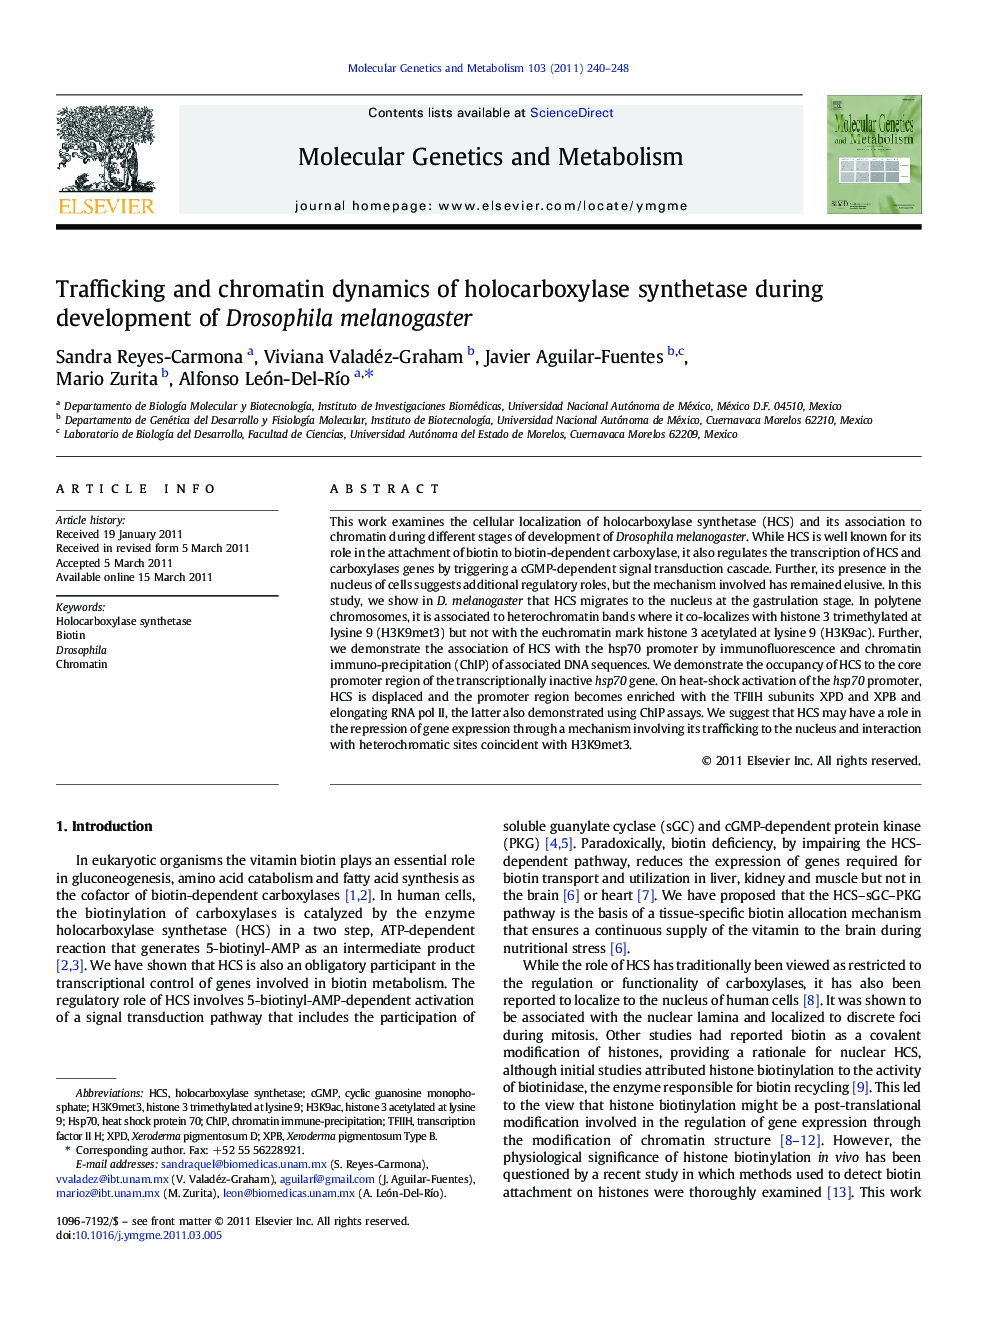 Trafficking and chromatin dynamics of holocarboxylase synthetase during development of Drosophila melanogaster